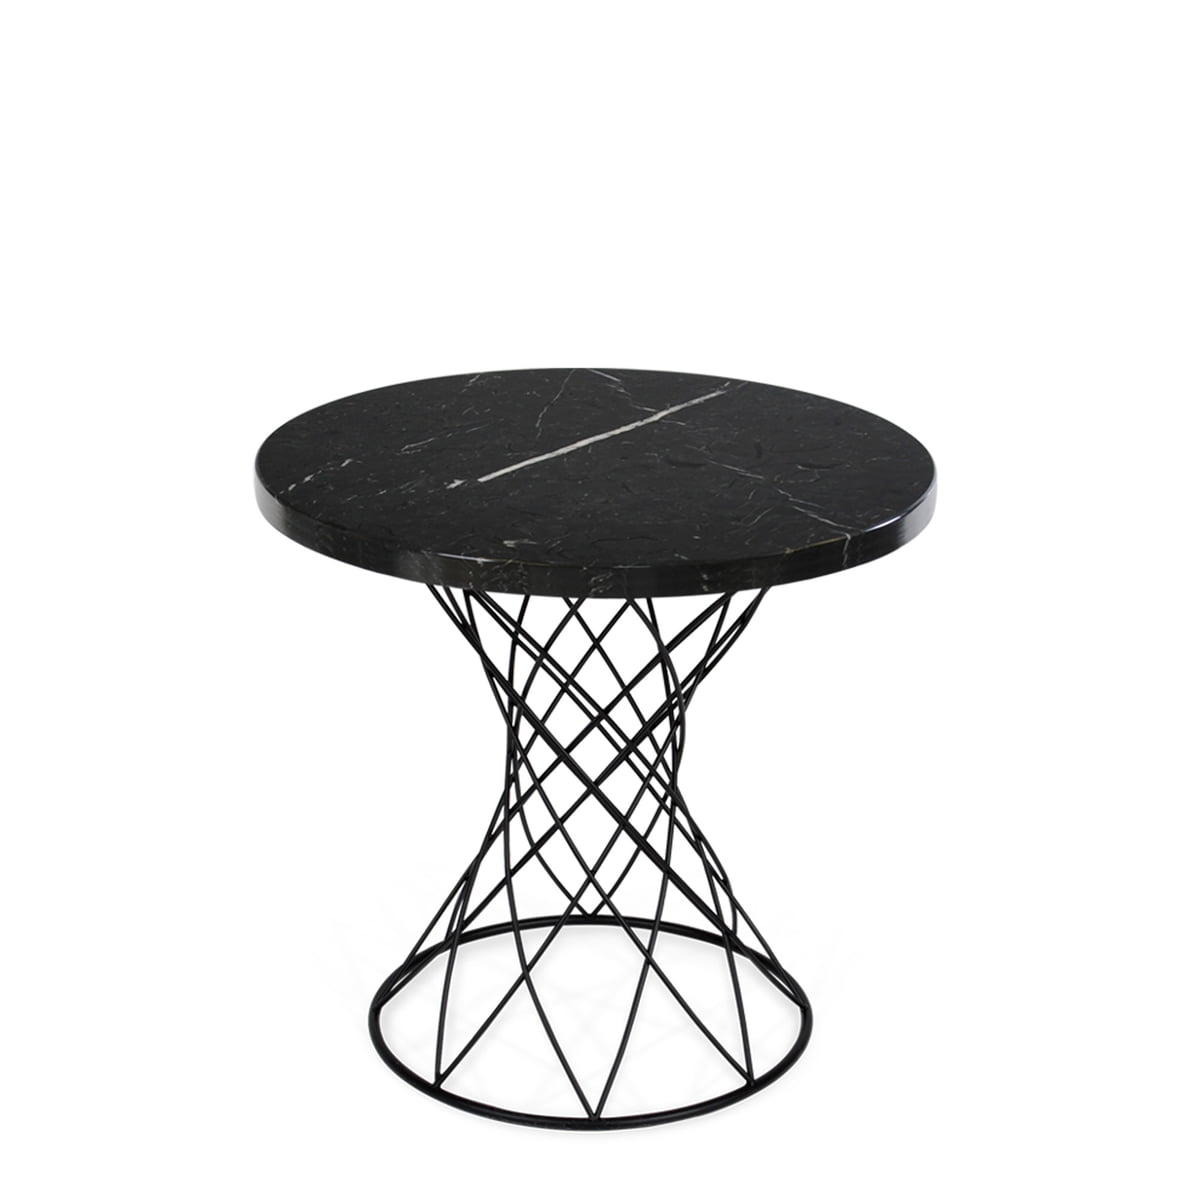 Ox Denmarq - Merge Table d'appoint, Ø 40 x H 40 cm, noir / marbre noir